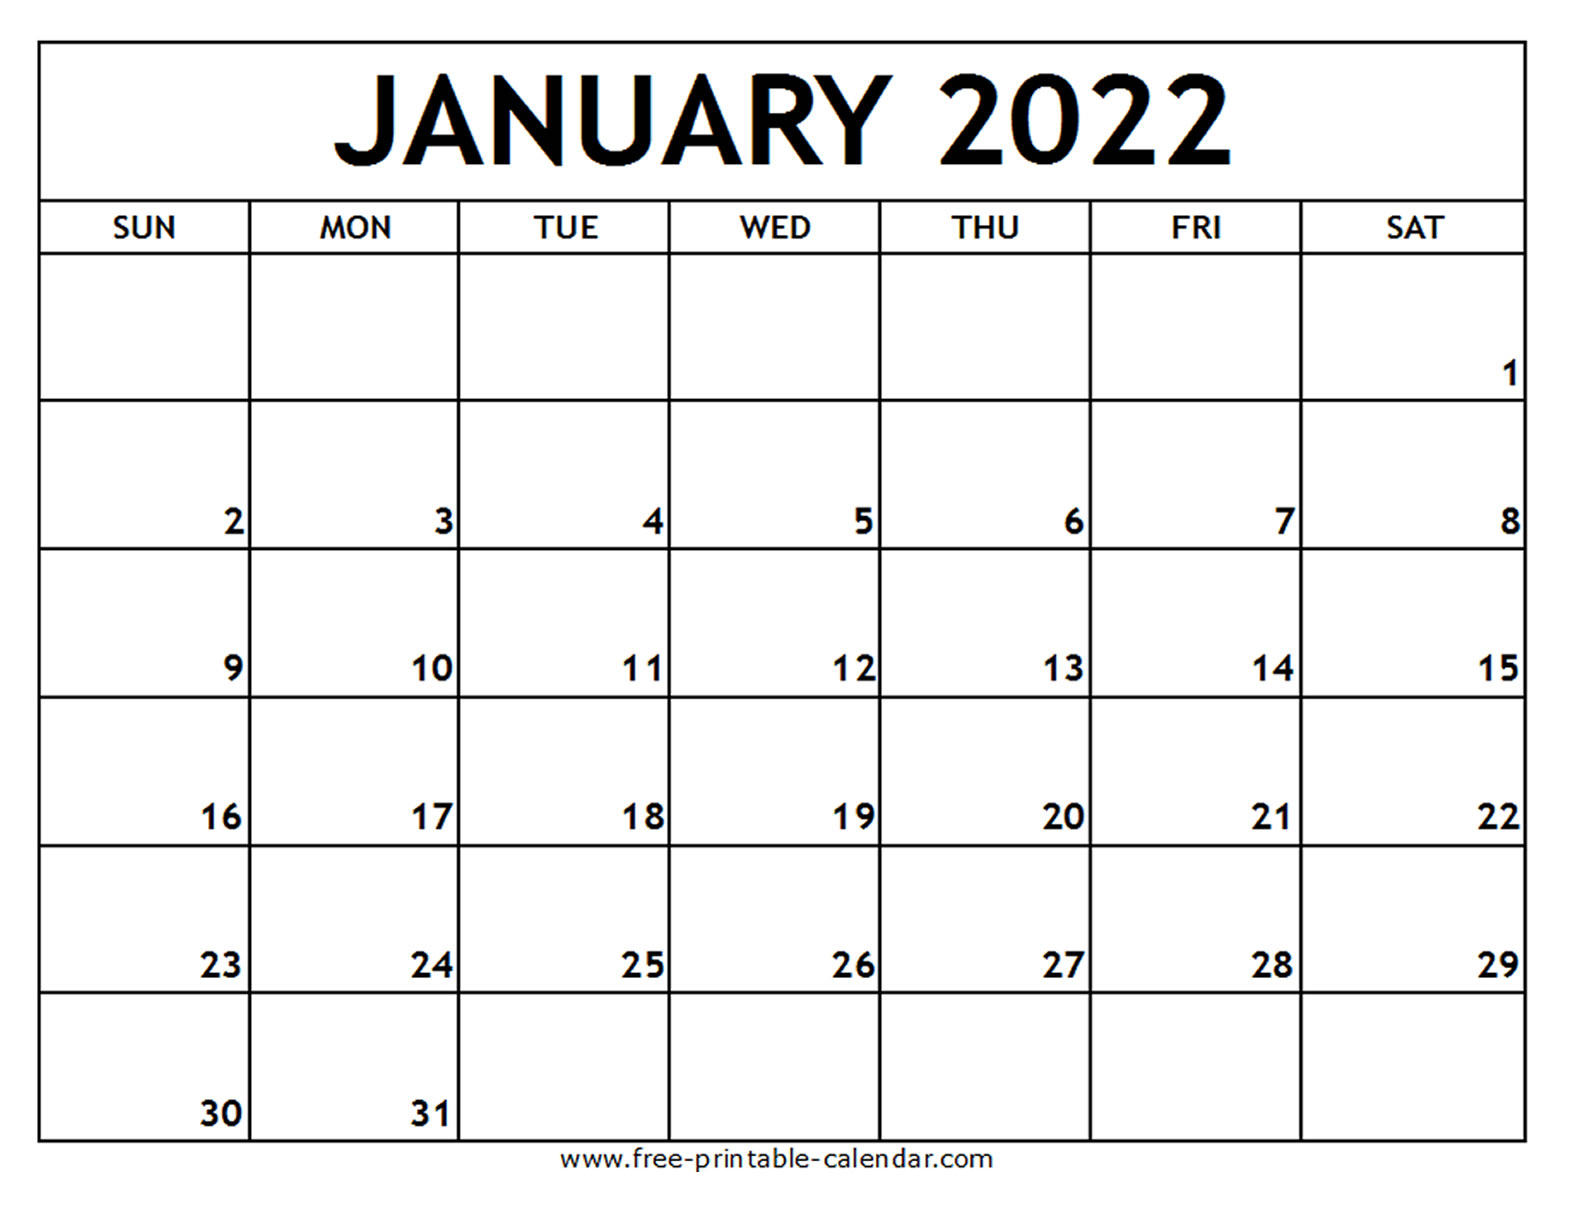 Get Jewish Calendar For January 2022